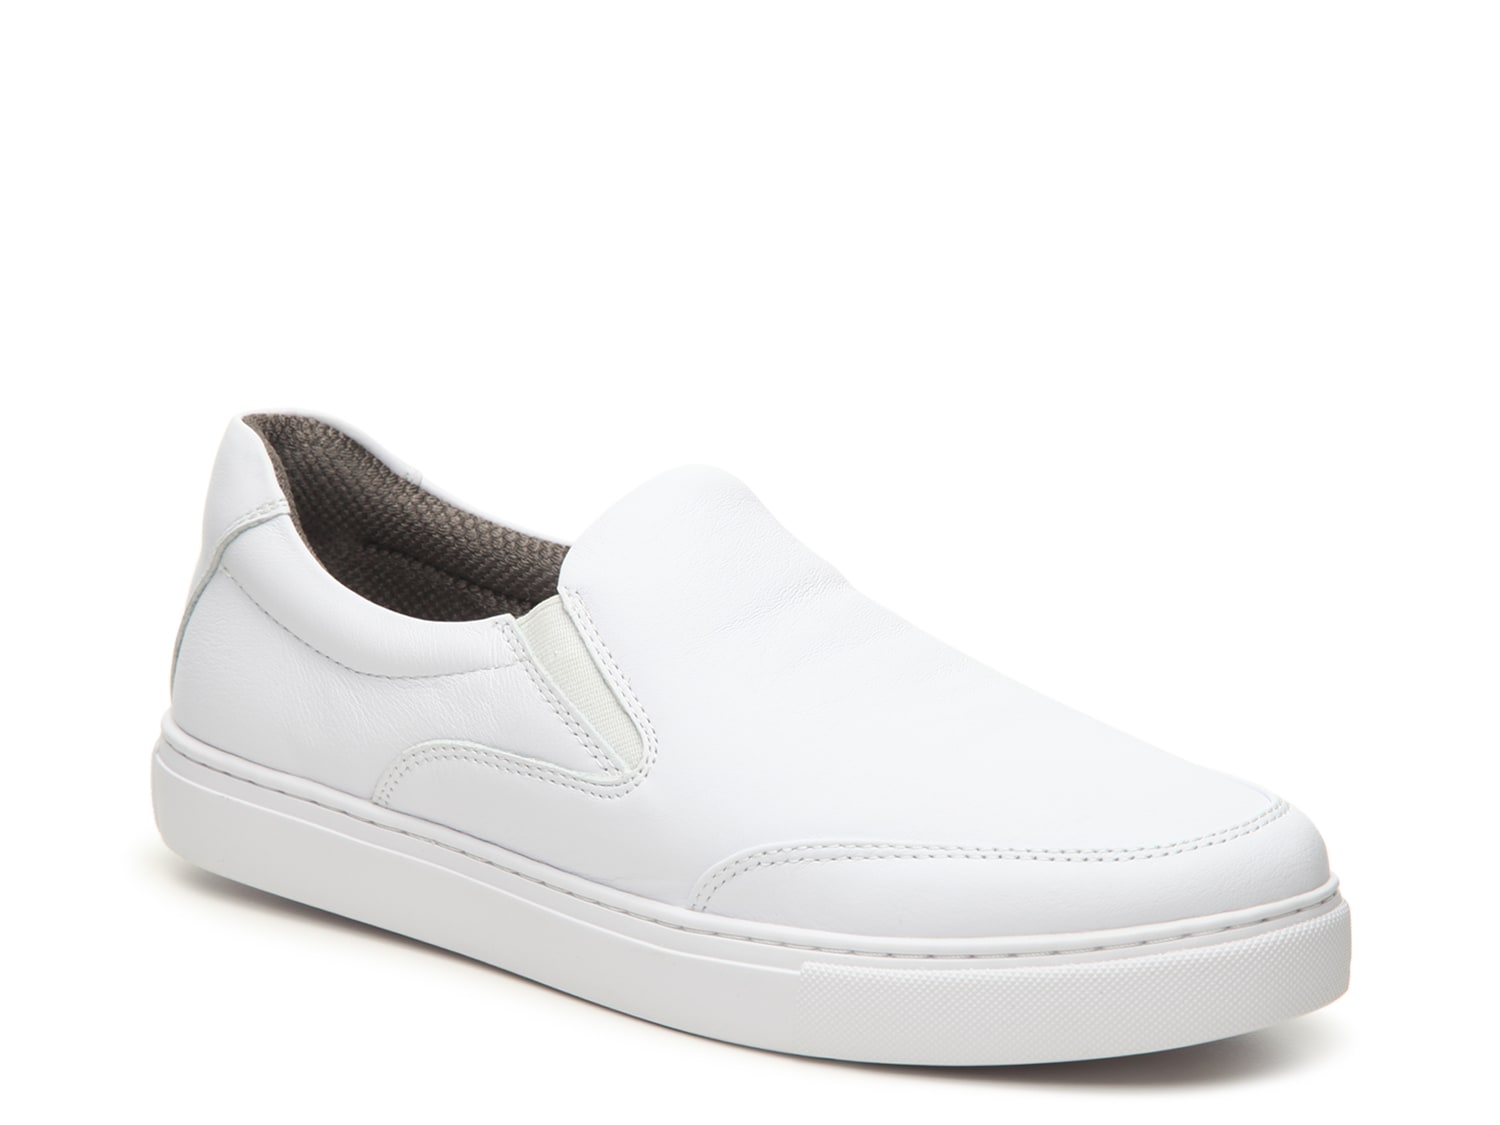 mens white slip resistant shoes